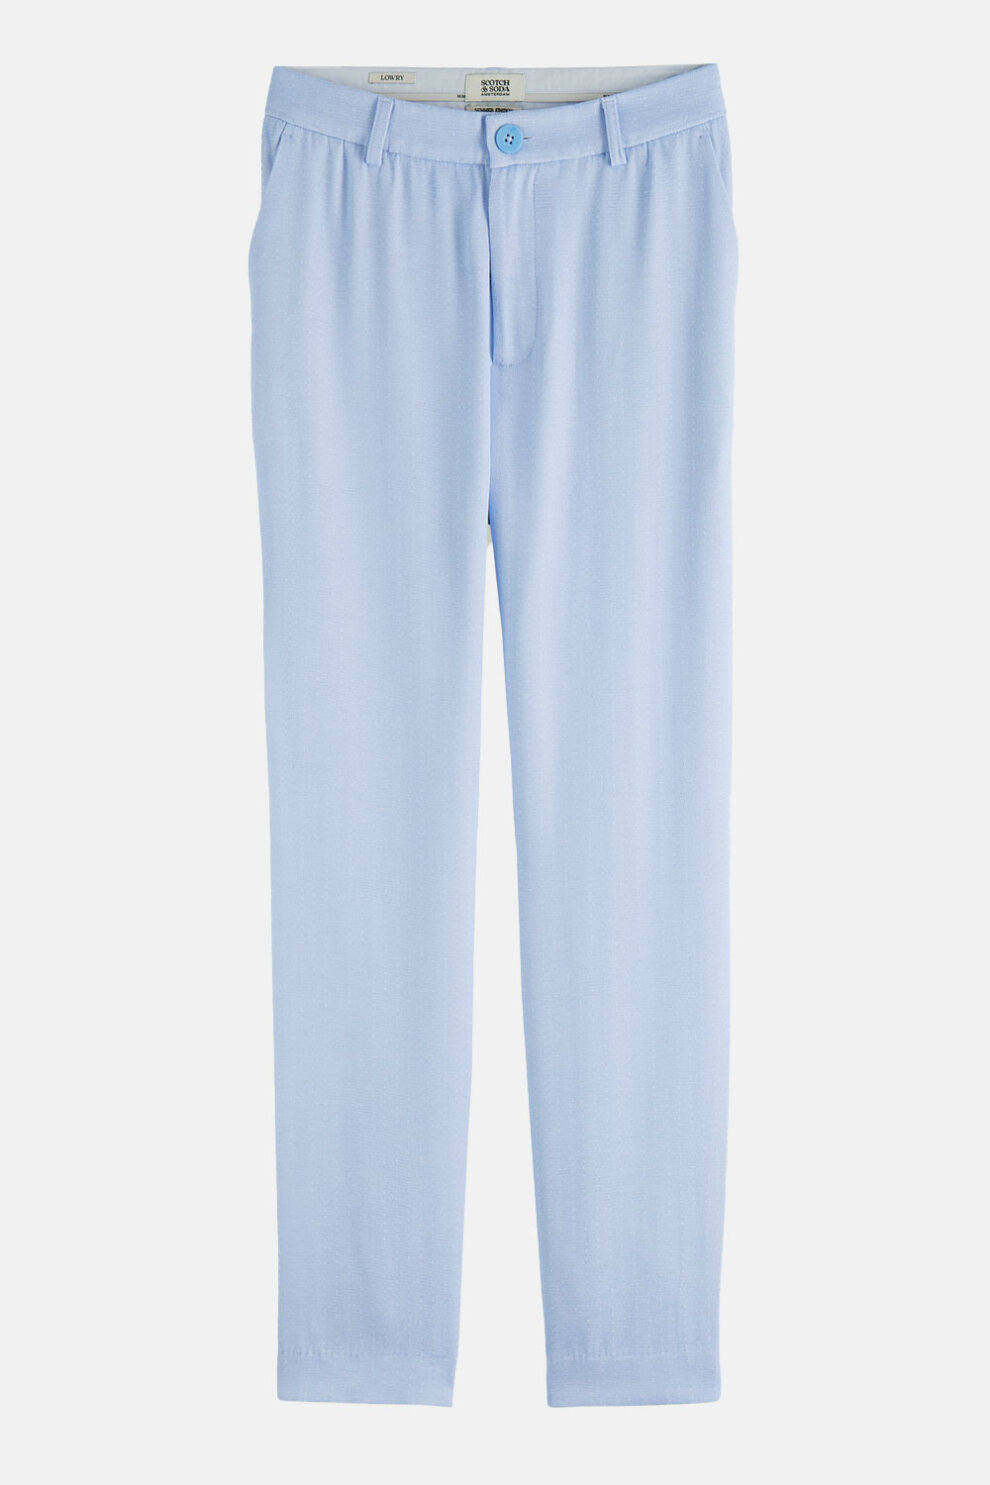 ŽENE - Hlače - Scotch & Soda Lowry hlače - Duge hlače - Plava